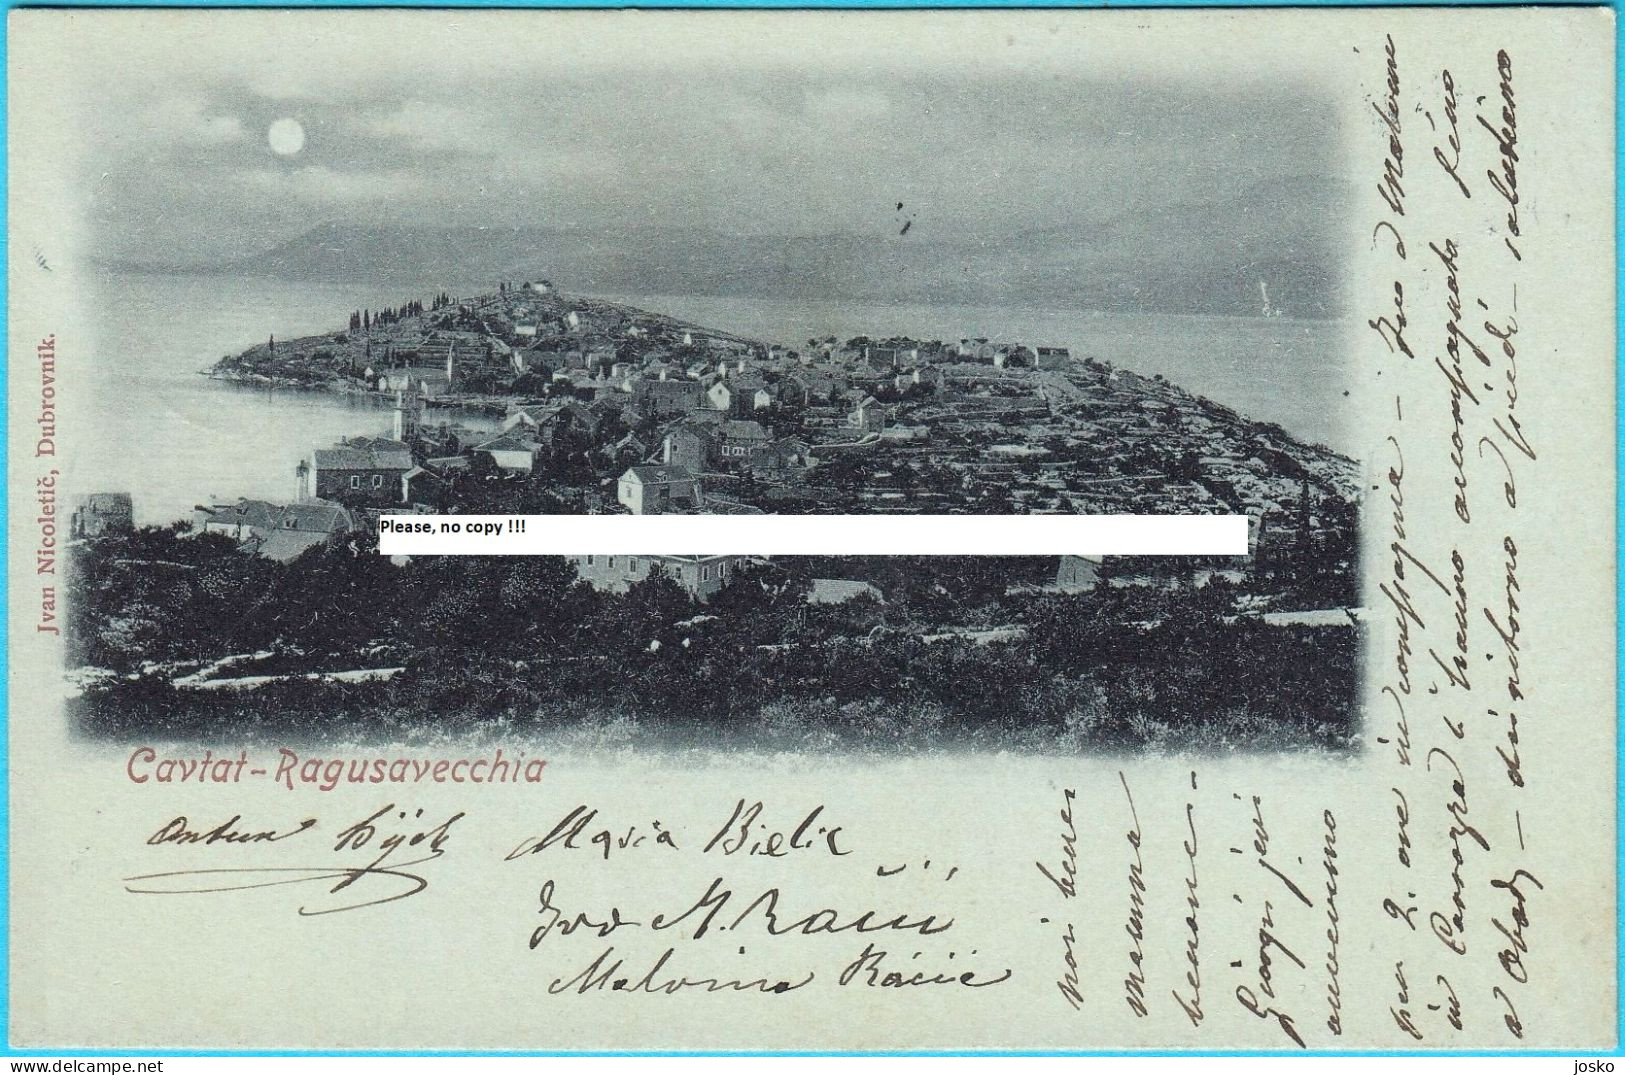 CAVTAT (Ragusavecchia) - Panorama * Croatia * Travelled 1901. In Dubrovnik (Bijelić) * By: Ivan Nikoletić, Dubrovnik - Croacia